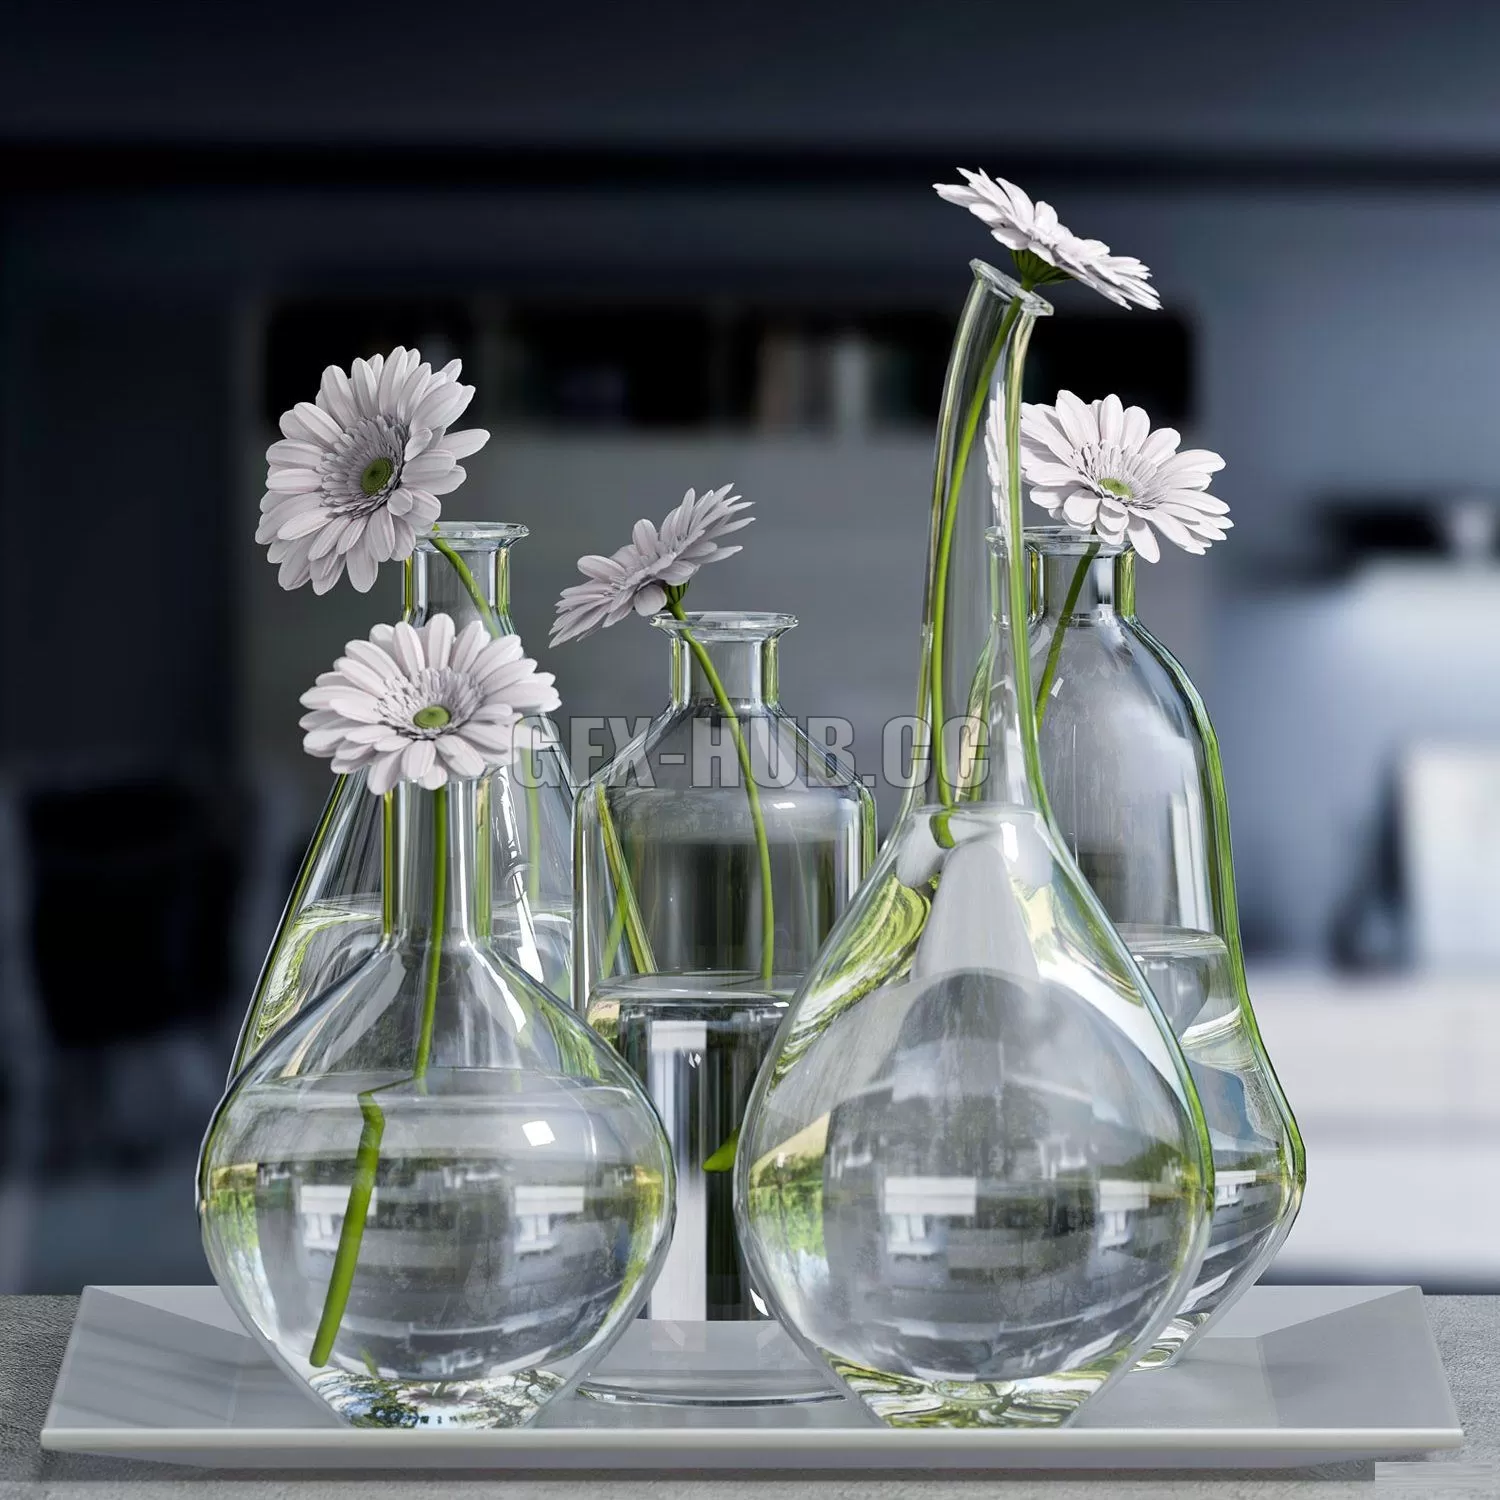 DECORATION – Decorative vases set 4